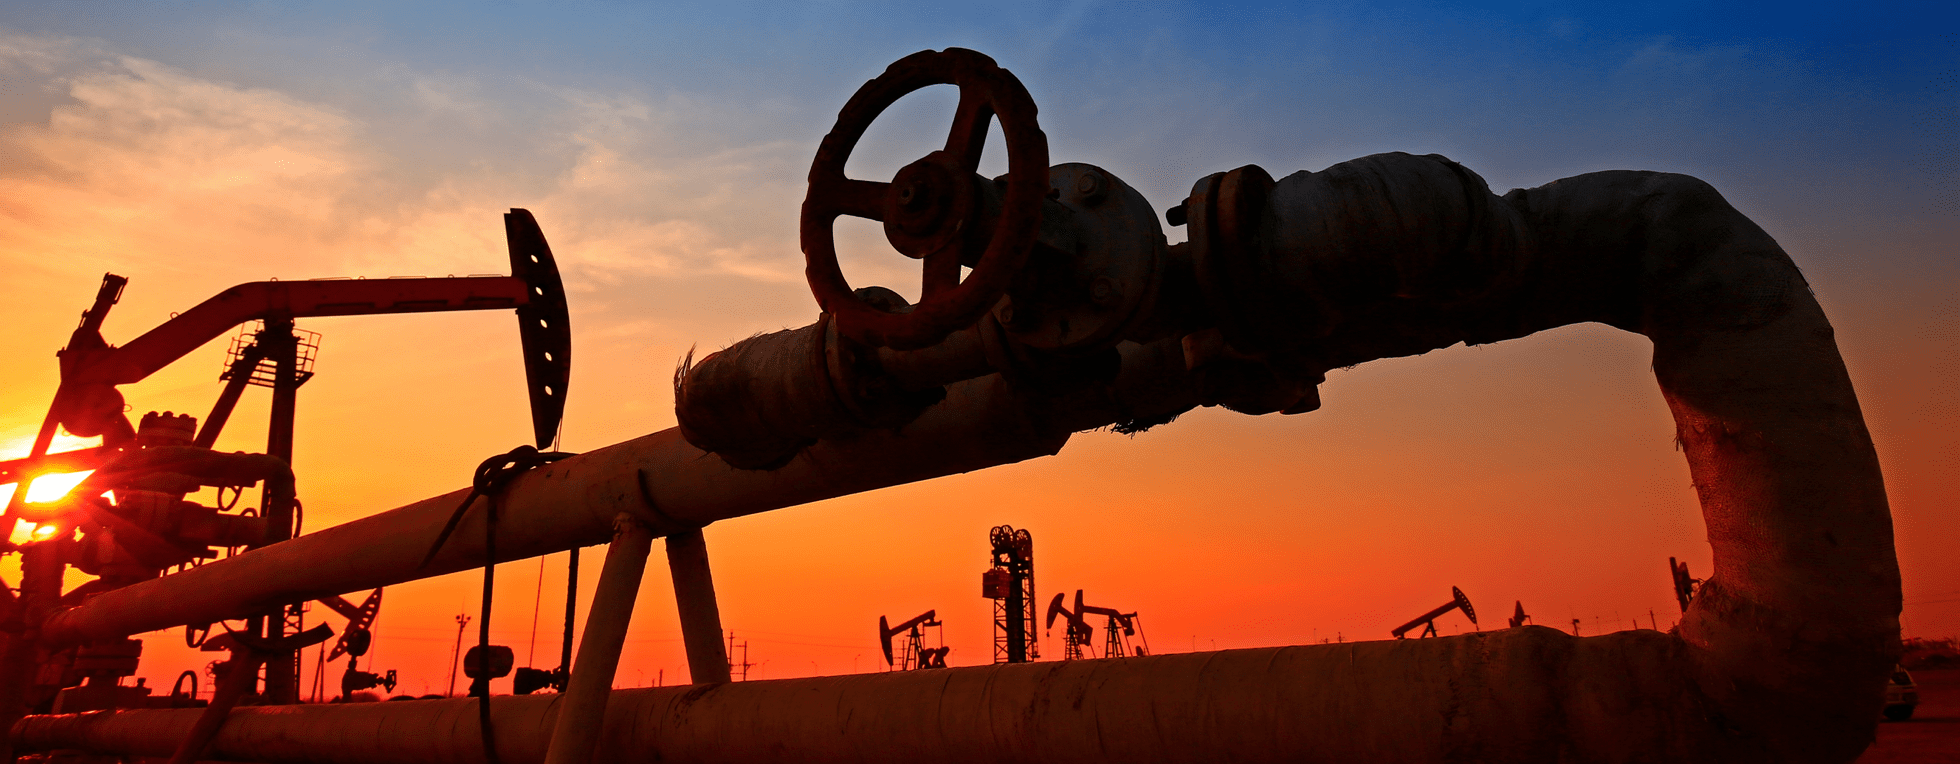 Texas Pipelines Winterize Equipment